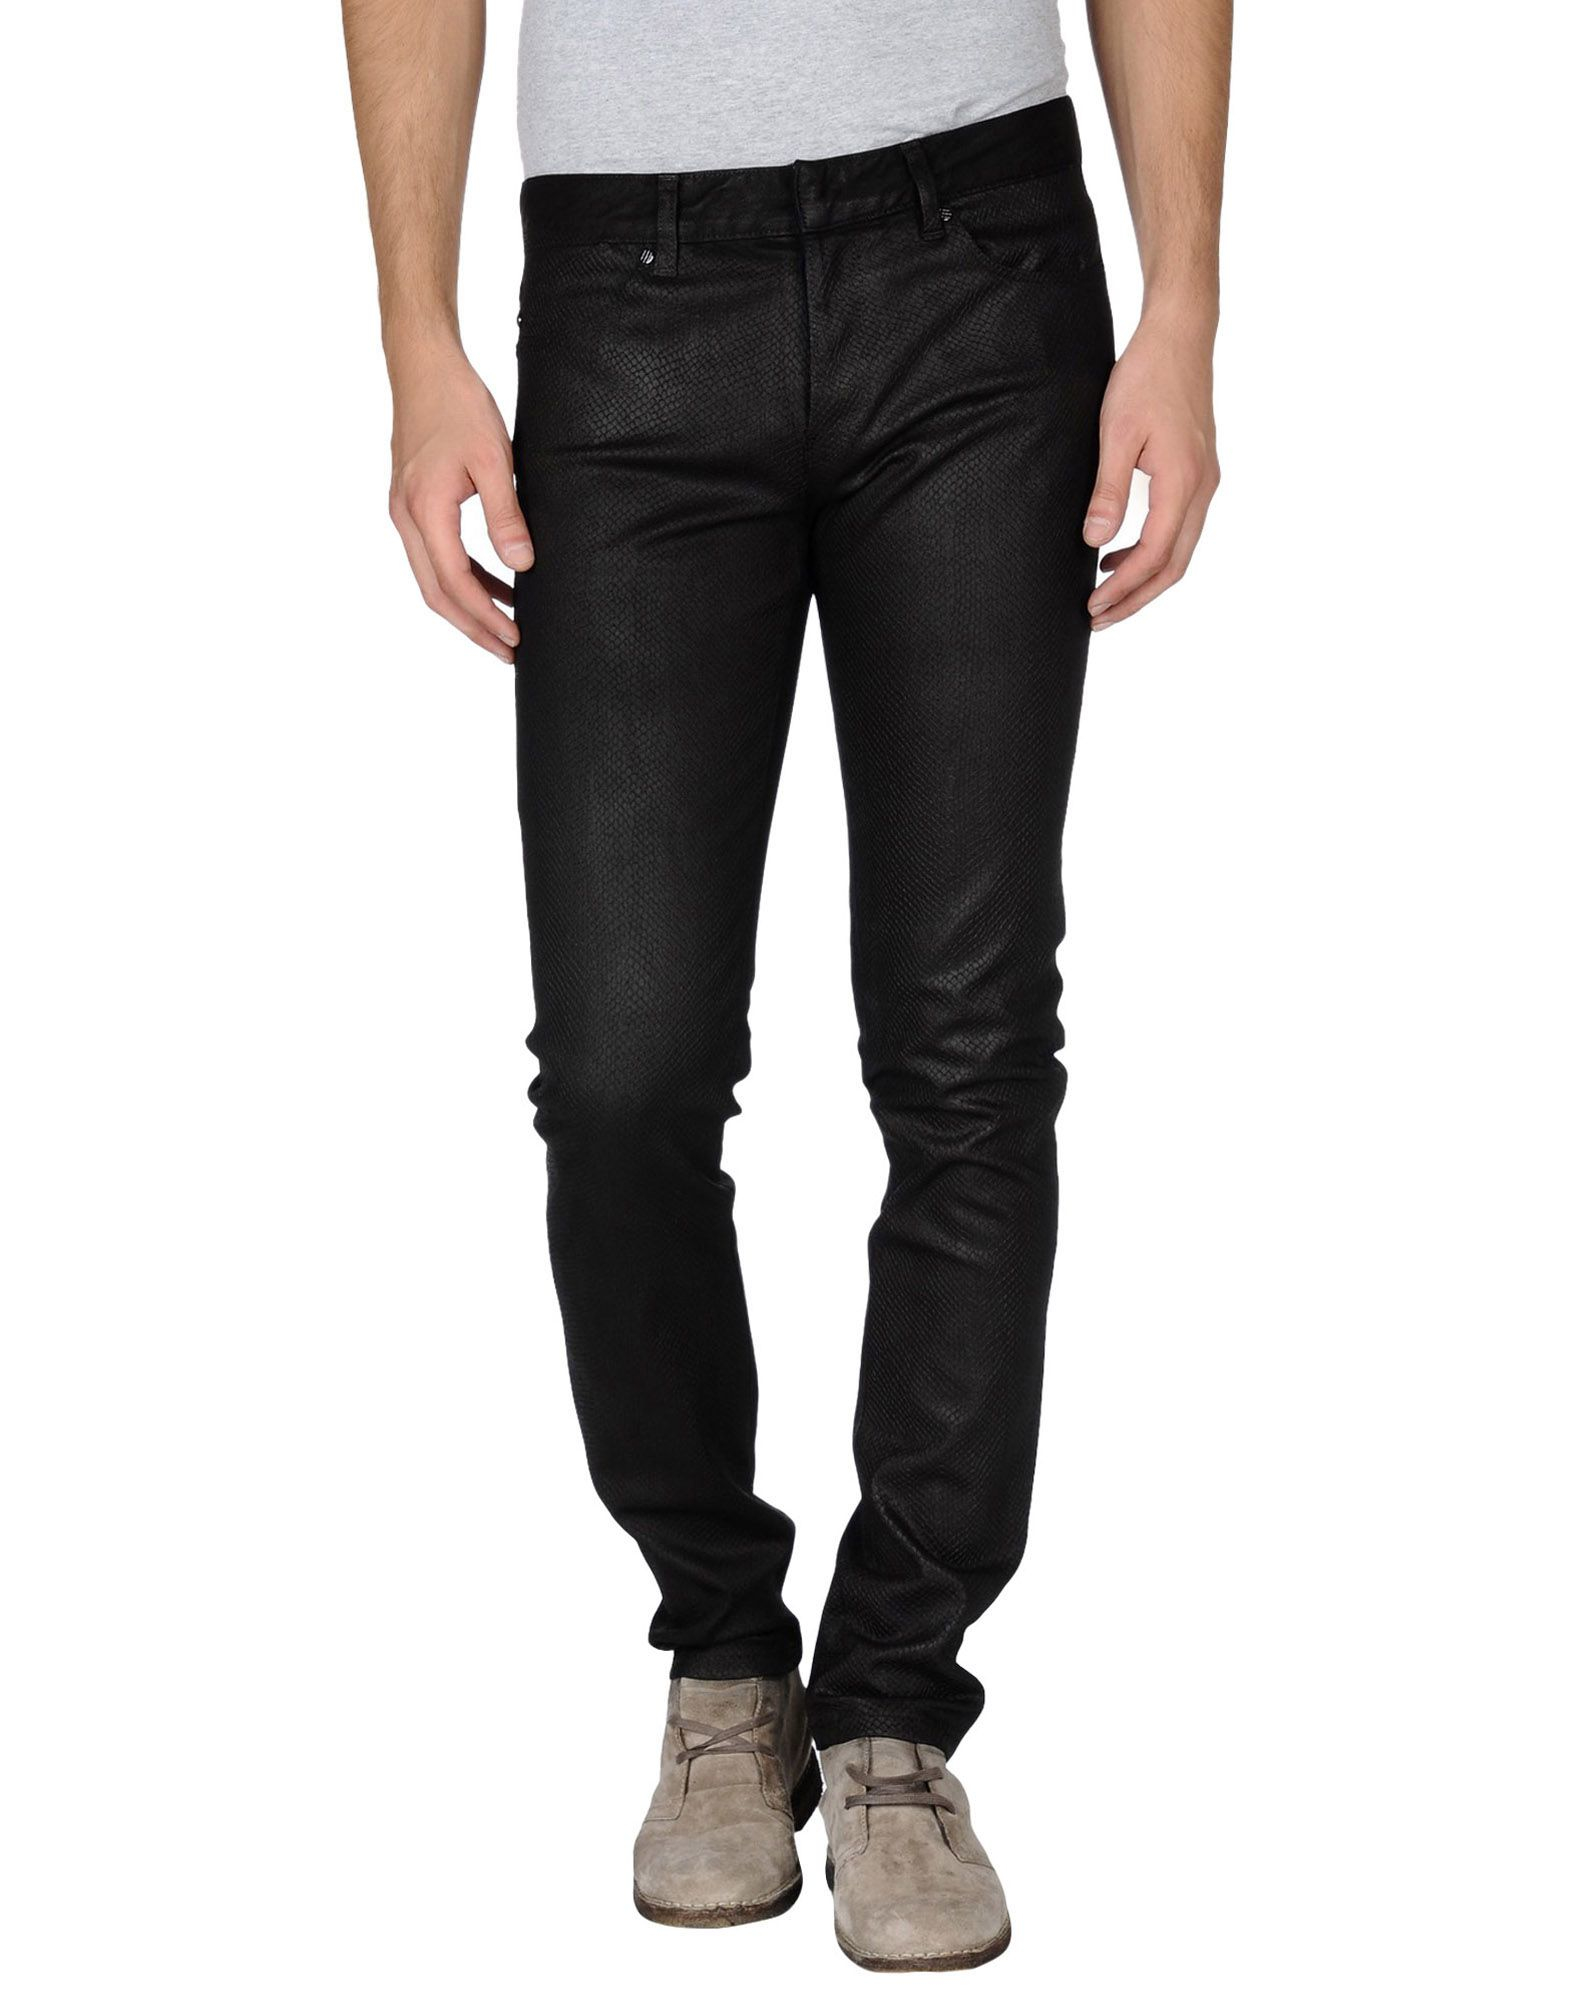 Lyst - Roberto Cavalli Denim Pants in Black for Men